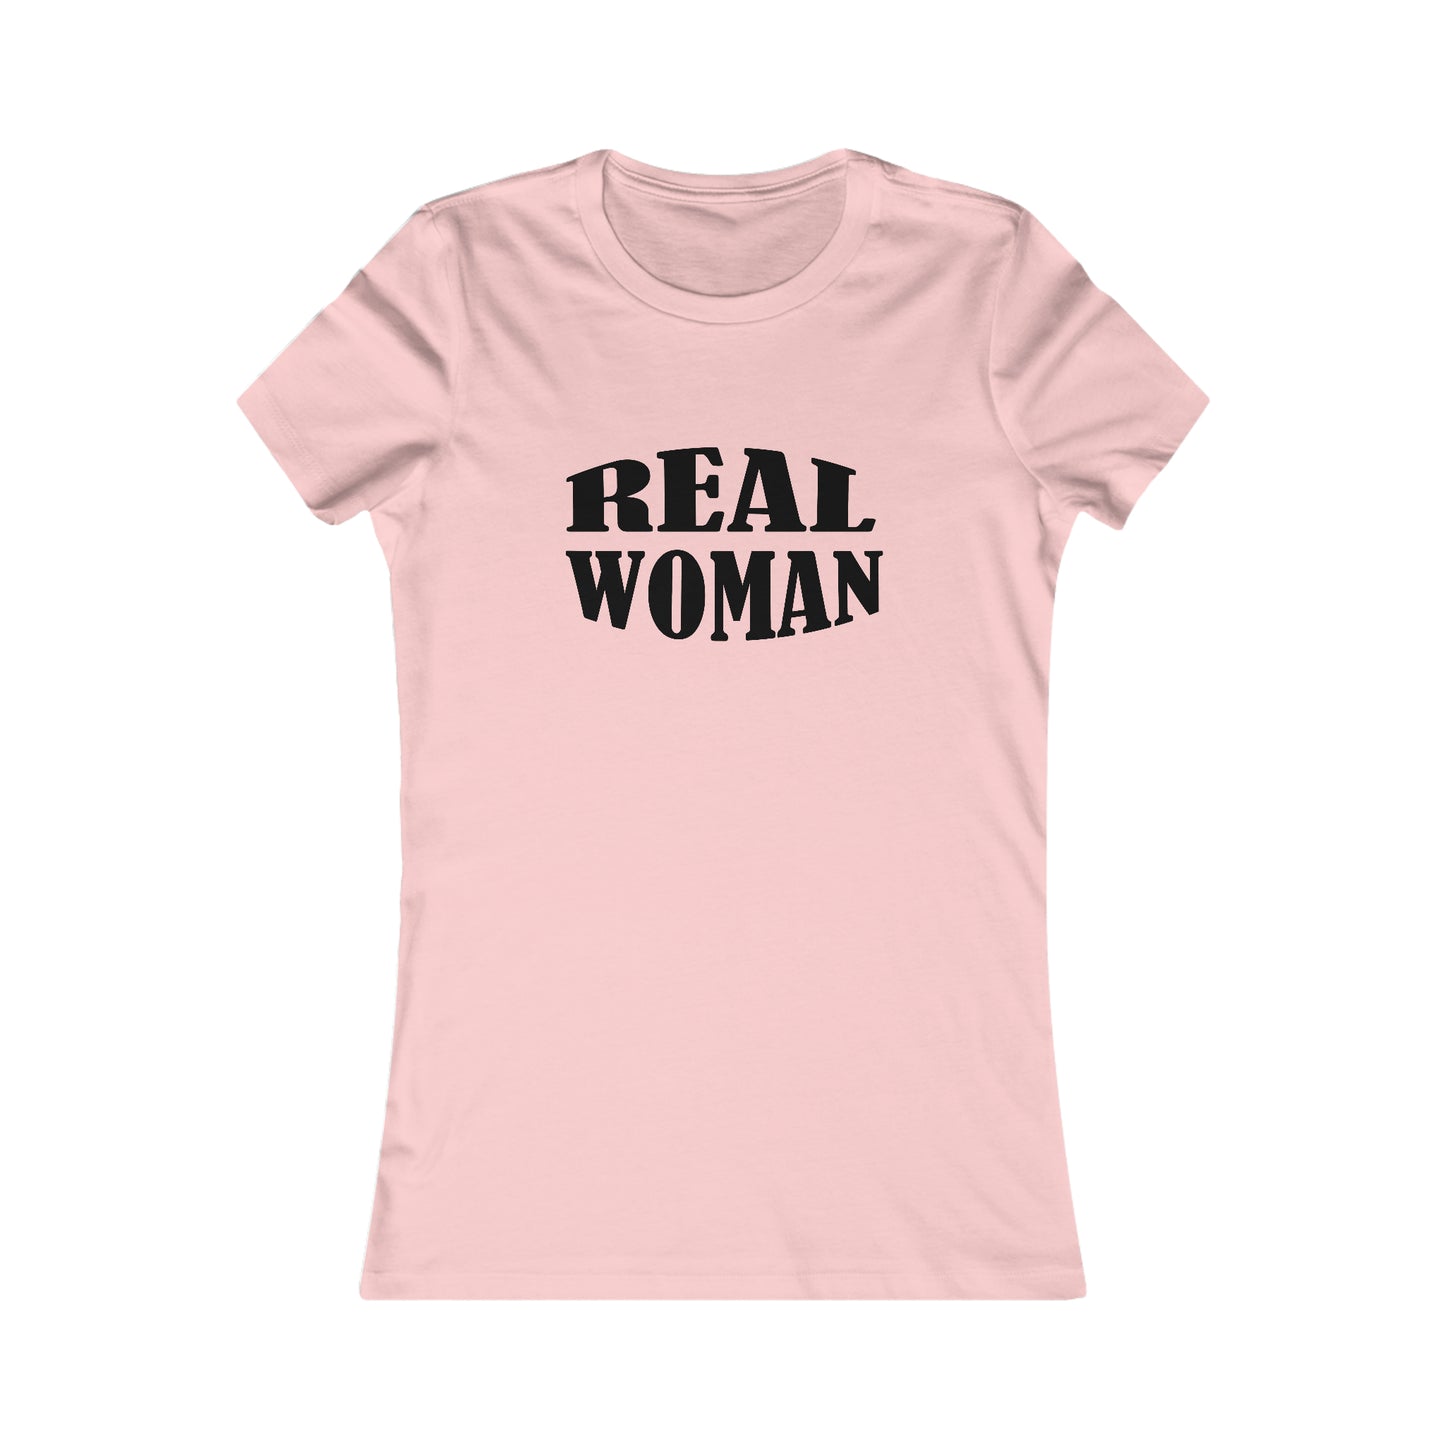 Real Woman T-Shirt For Genuine Woman TShirt For Natural Born Woman T Shirt For Female Shirt For Inspirational Gift